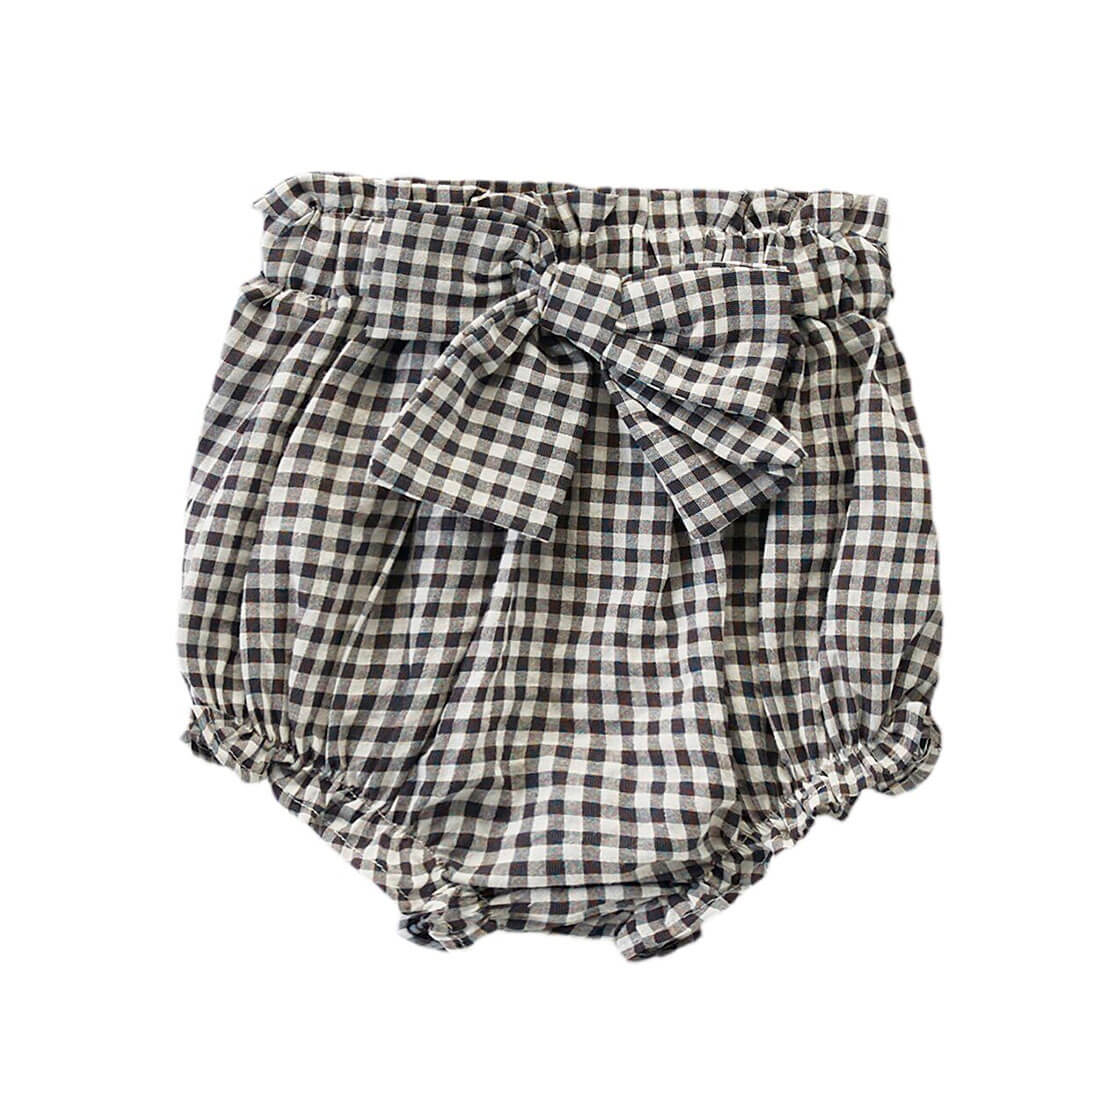 Plaid Bowknot Baby Shorts Black 3-6 M 